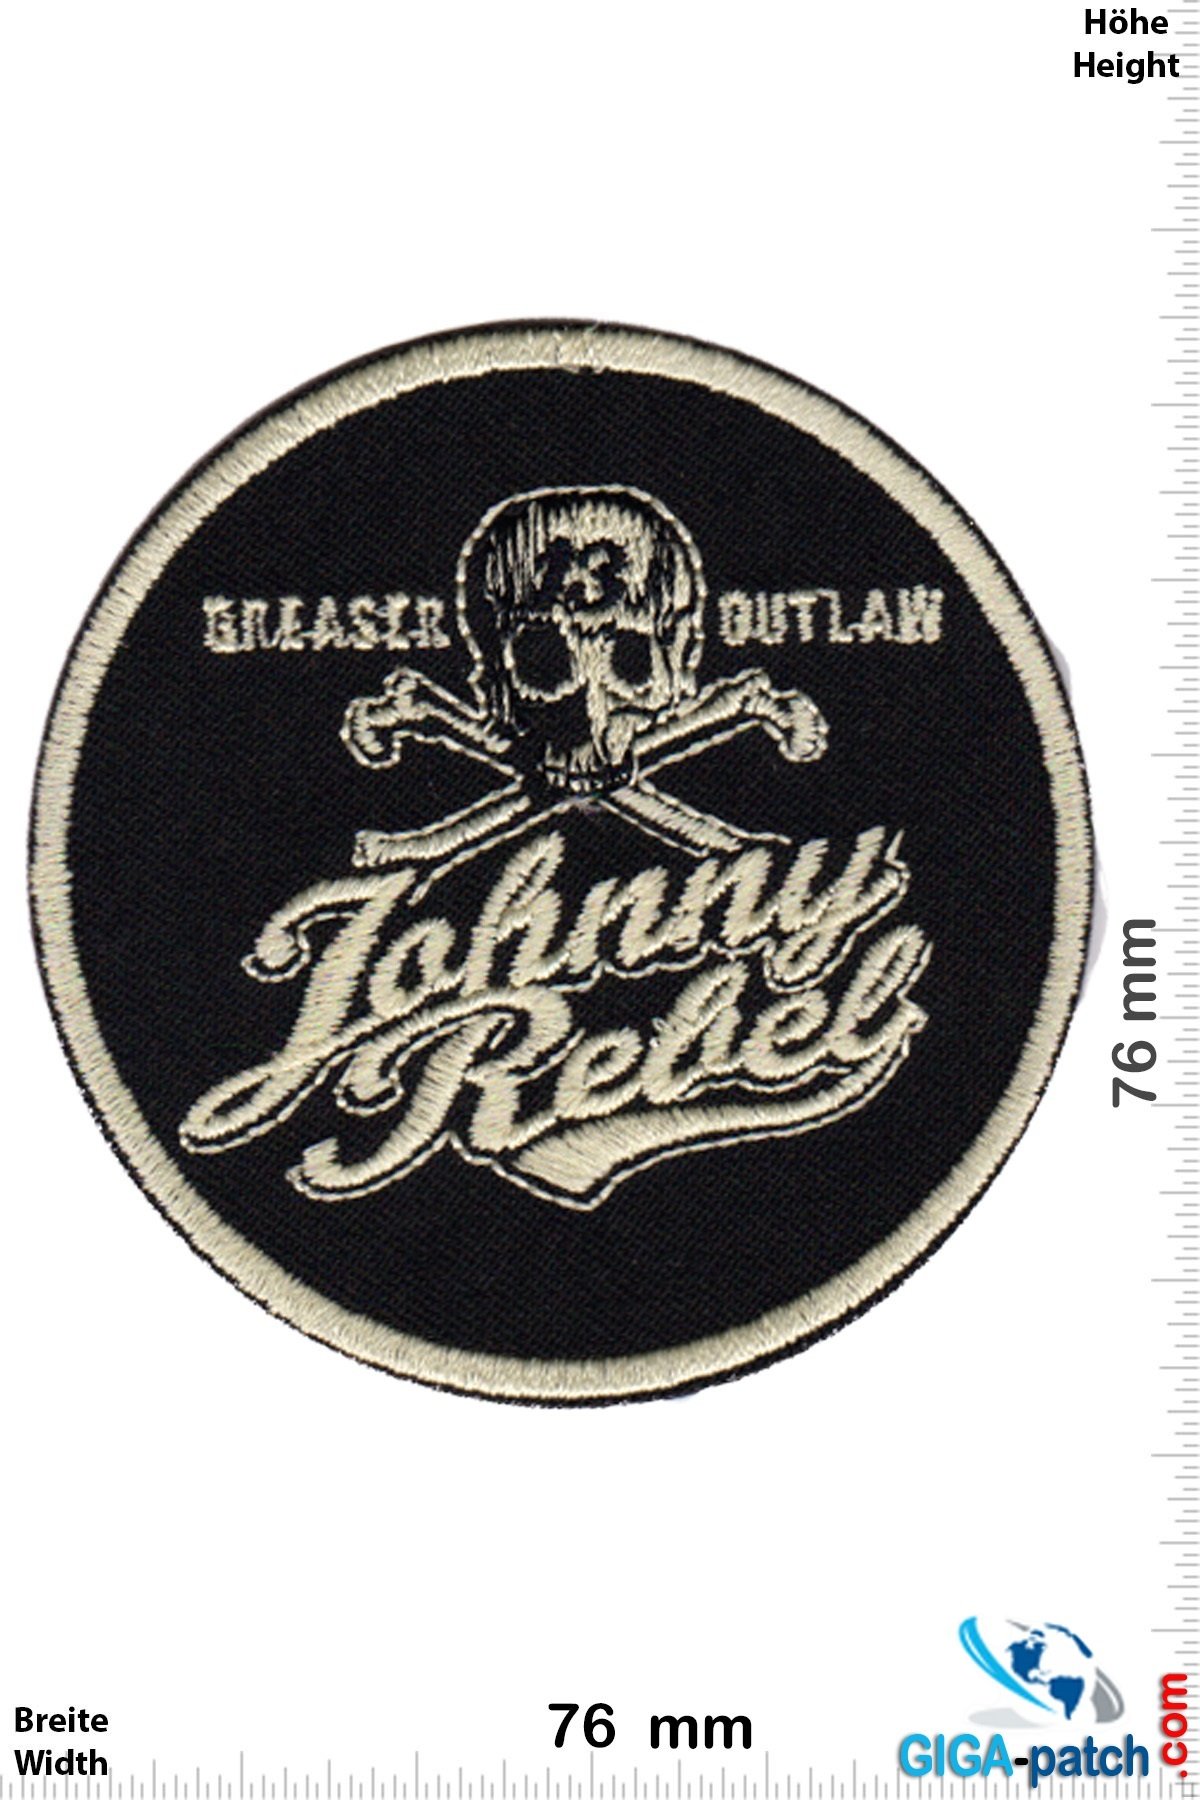 Hotrod Johnny Rebel - Greaser Outlaw - Lucky 13